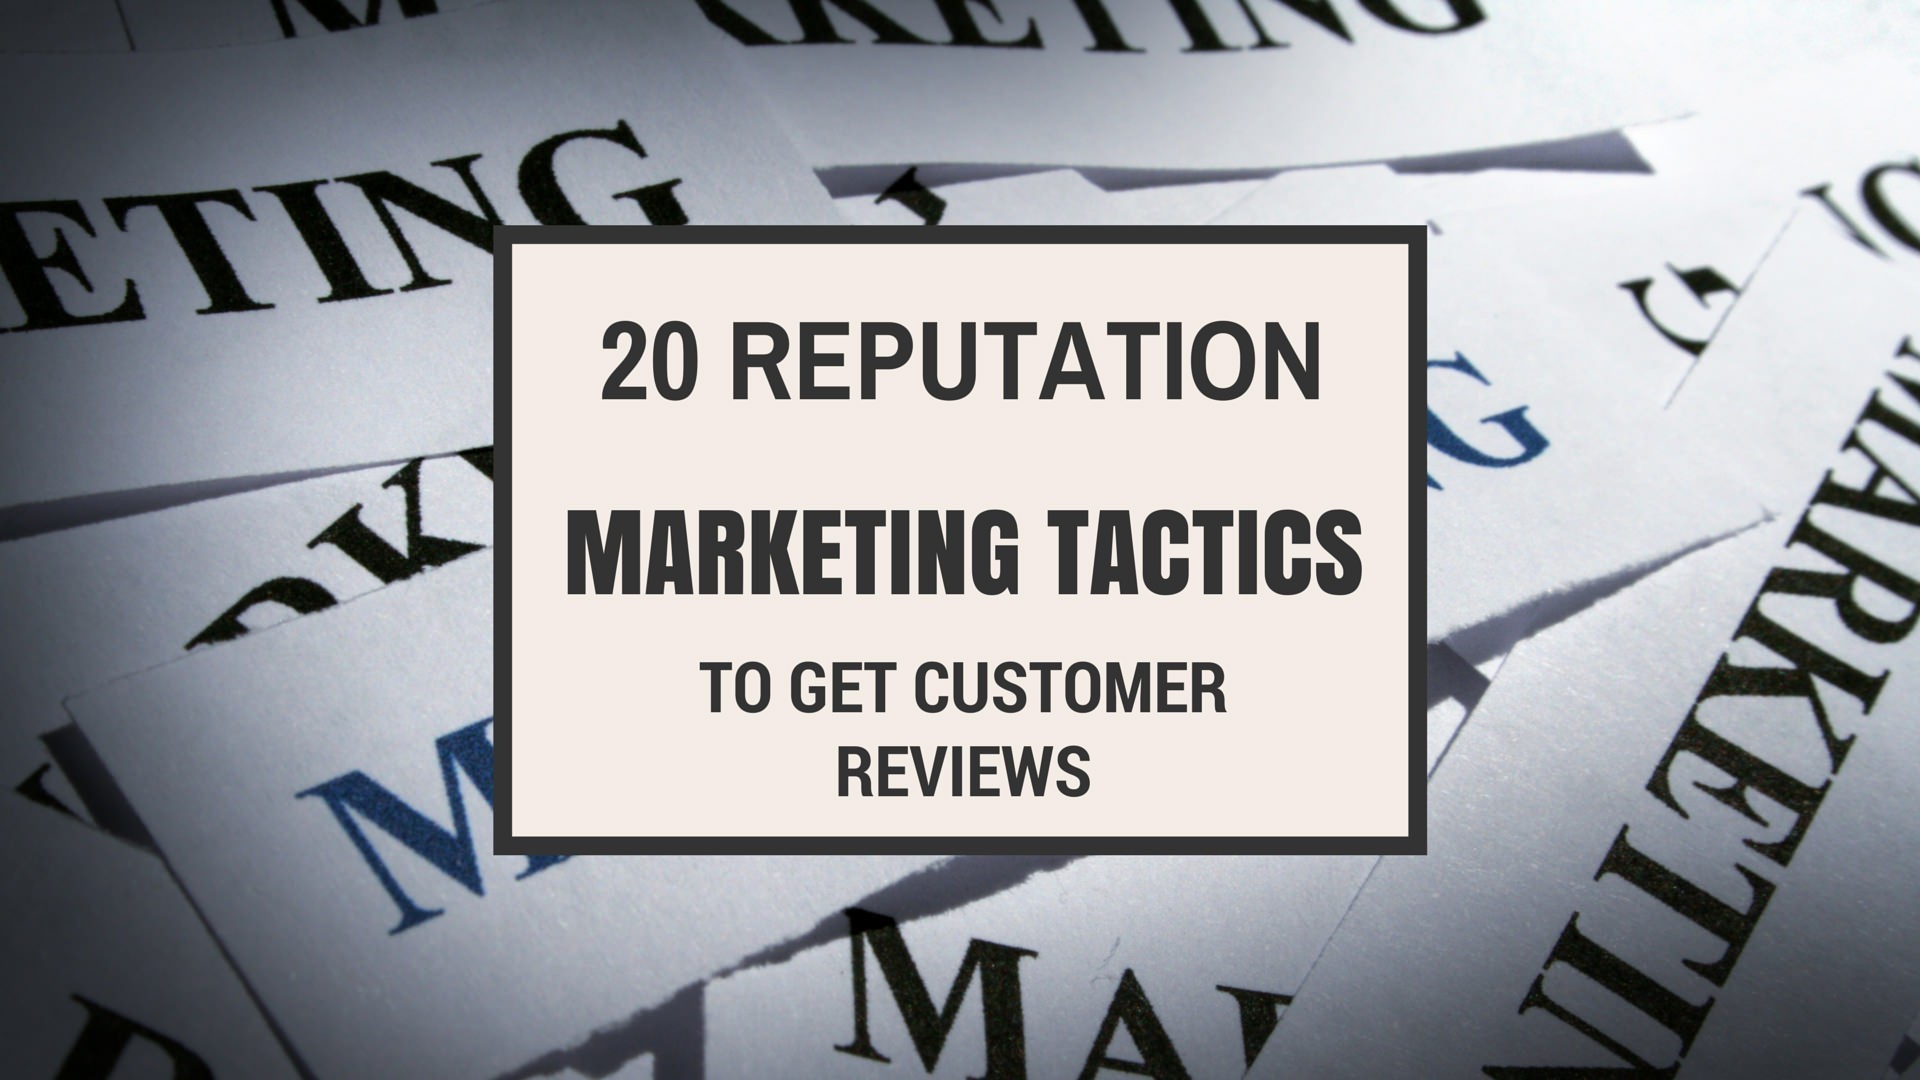 20 Reputation Marketing Tactics to get Customer Reviews